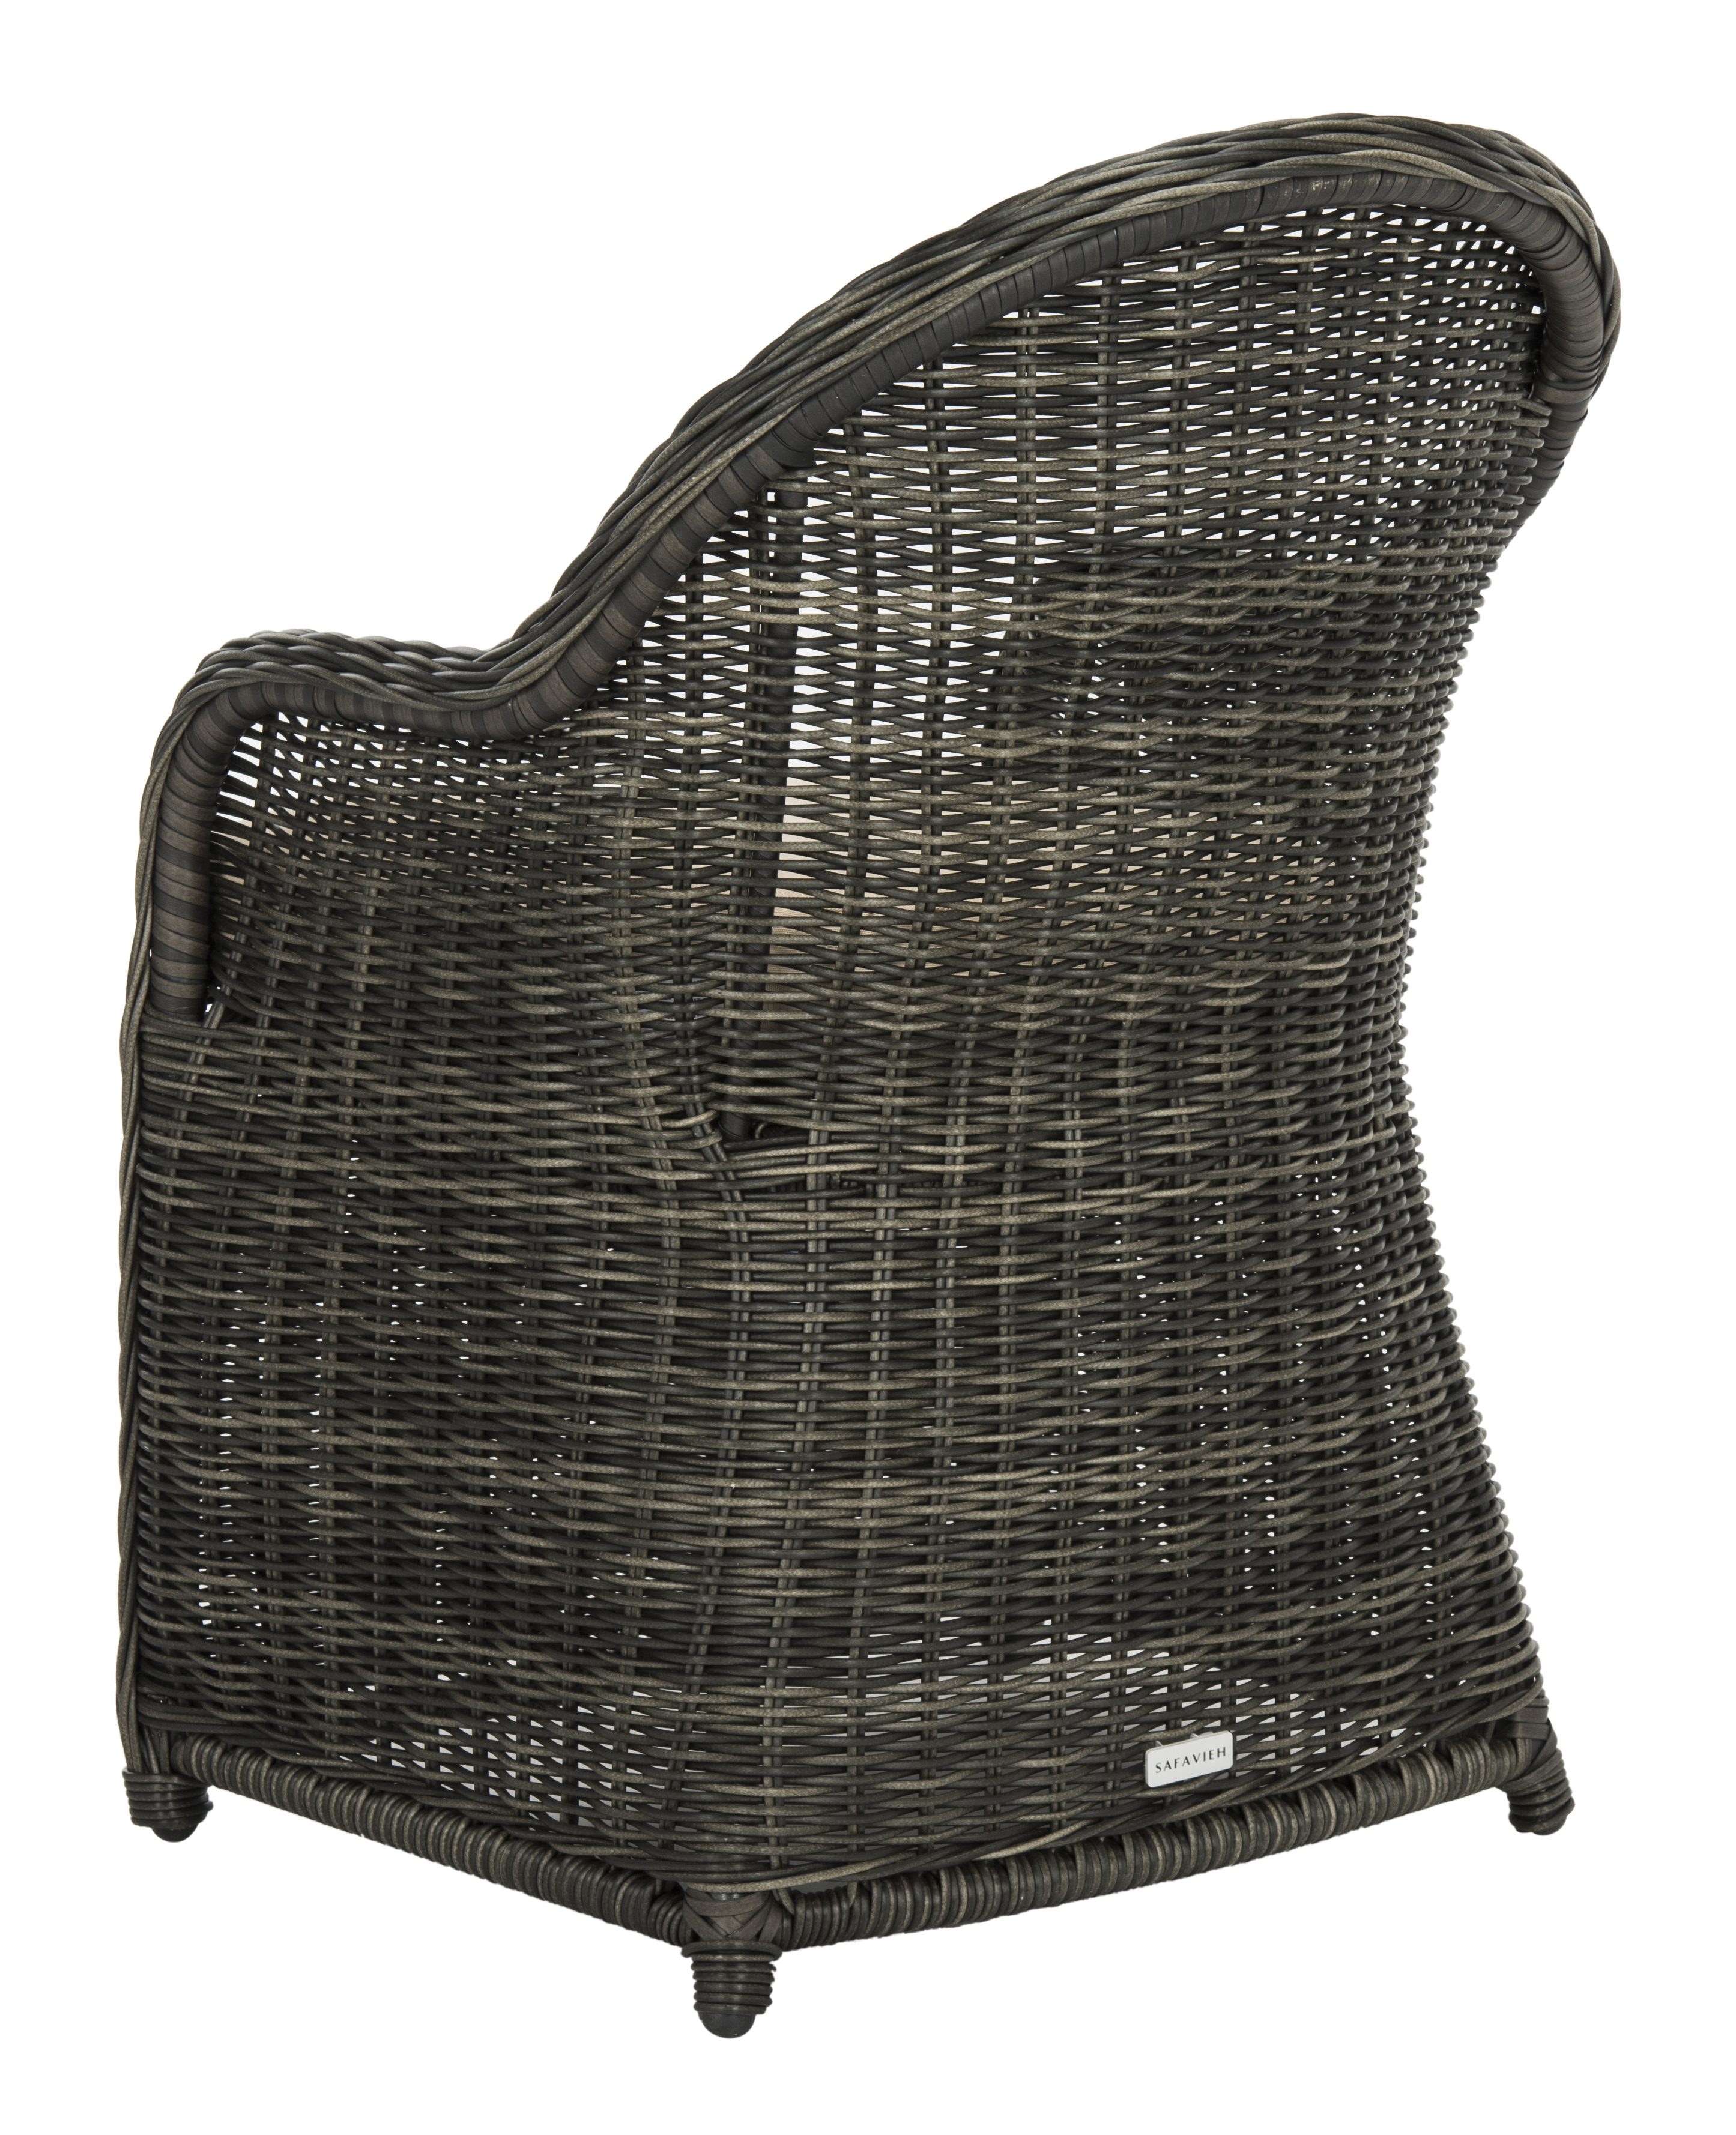 Newton Wicker Arm Chair With Cushion - Grey/Beige - Arlo Home - Image 3